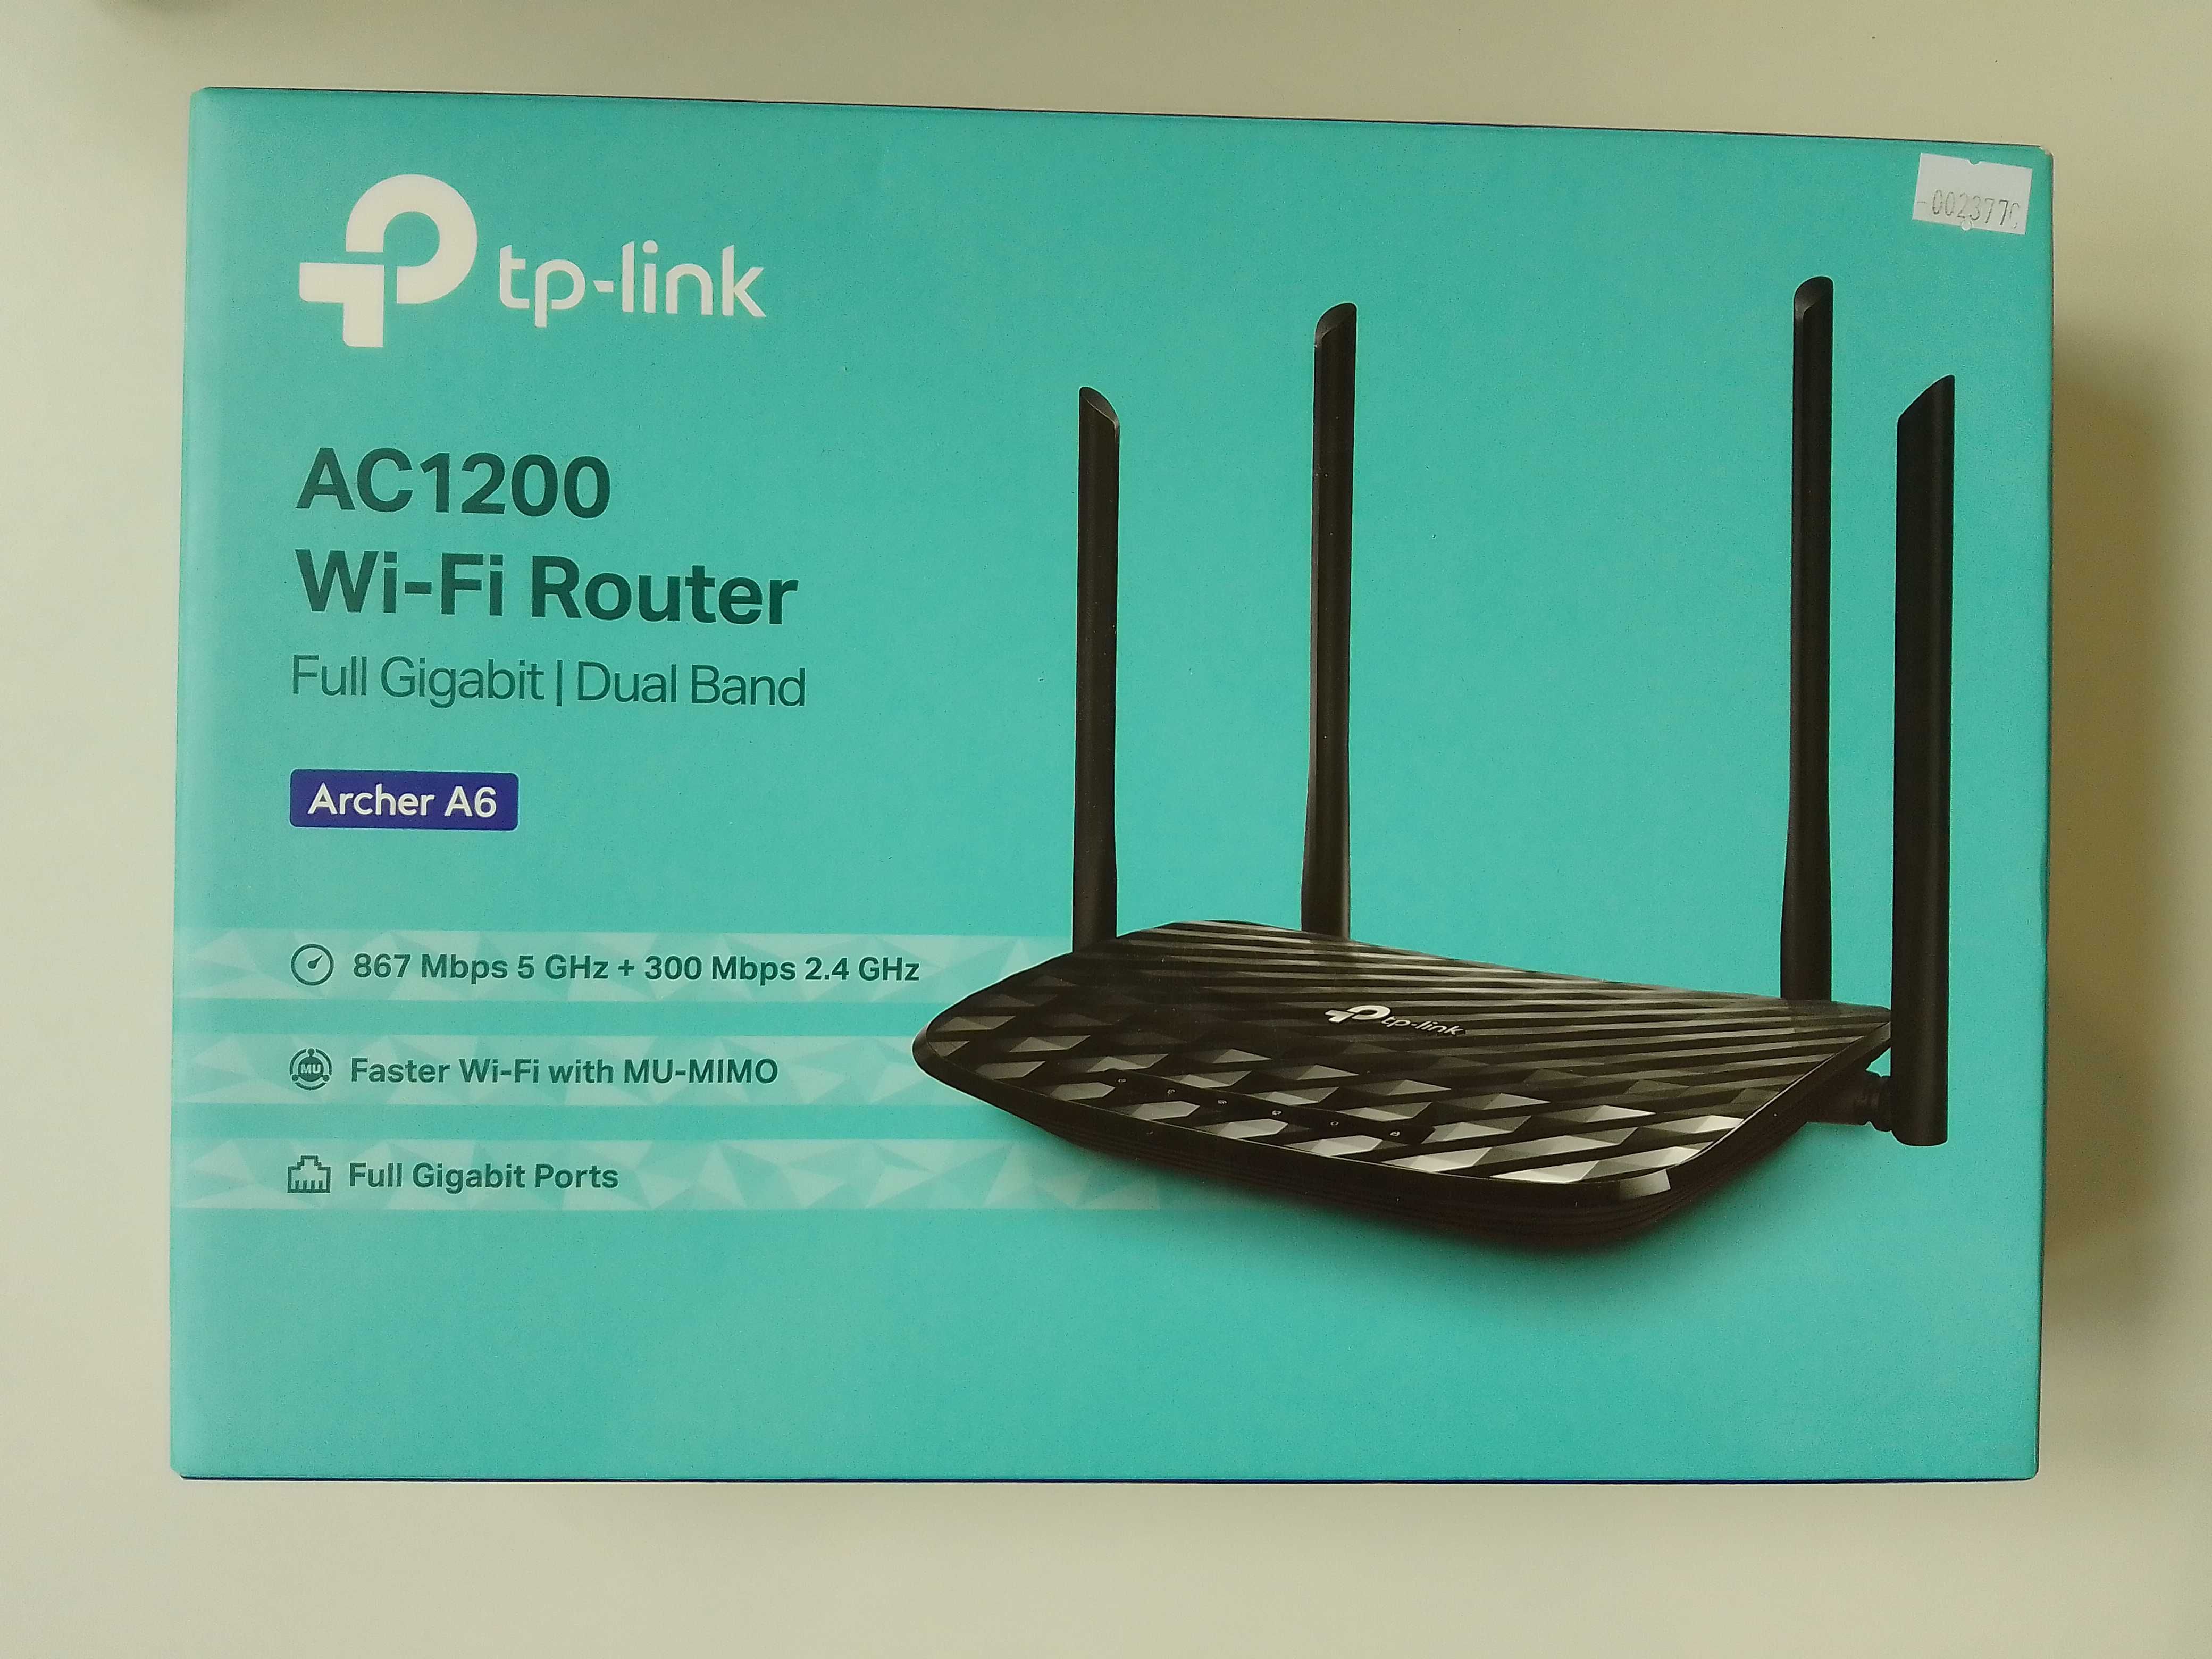 Tp-link AC1200 Wi-Fi Router Archer A6 outlet (002377)